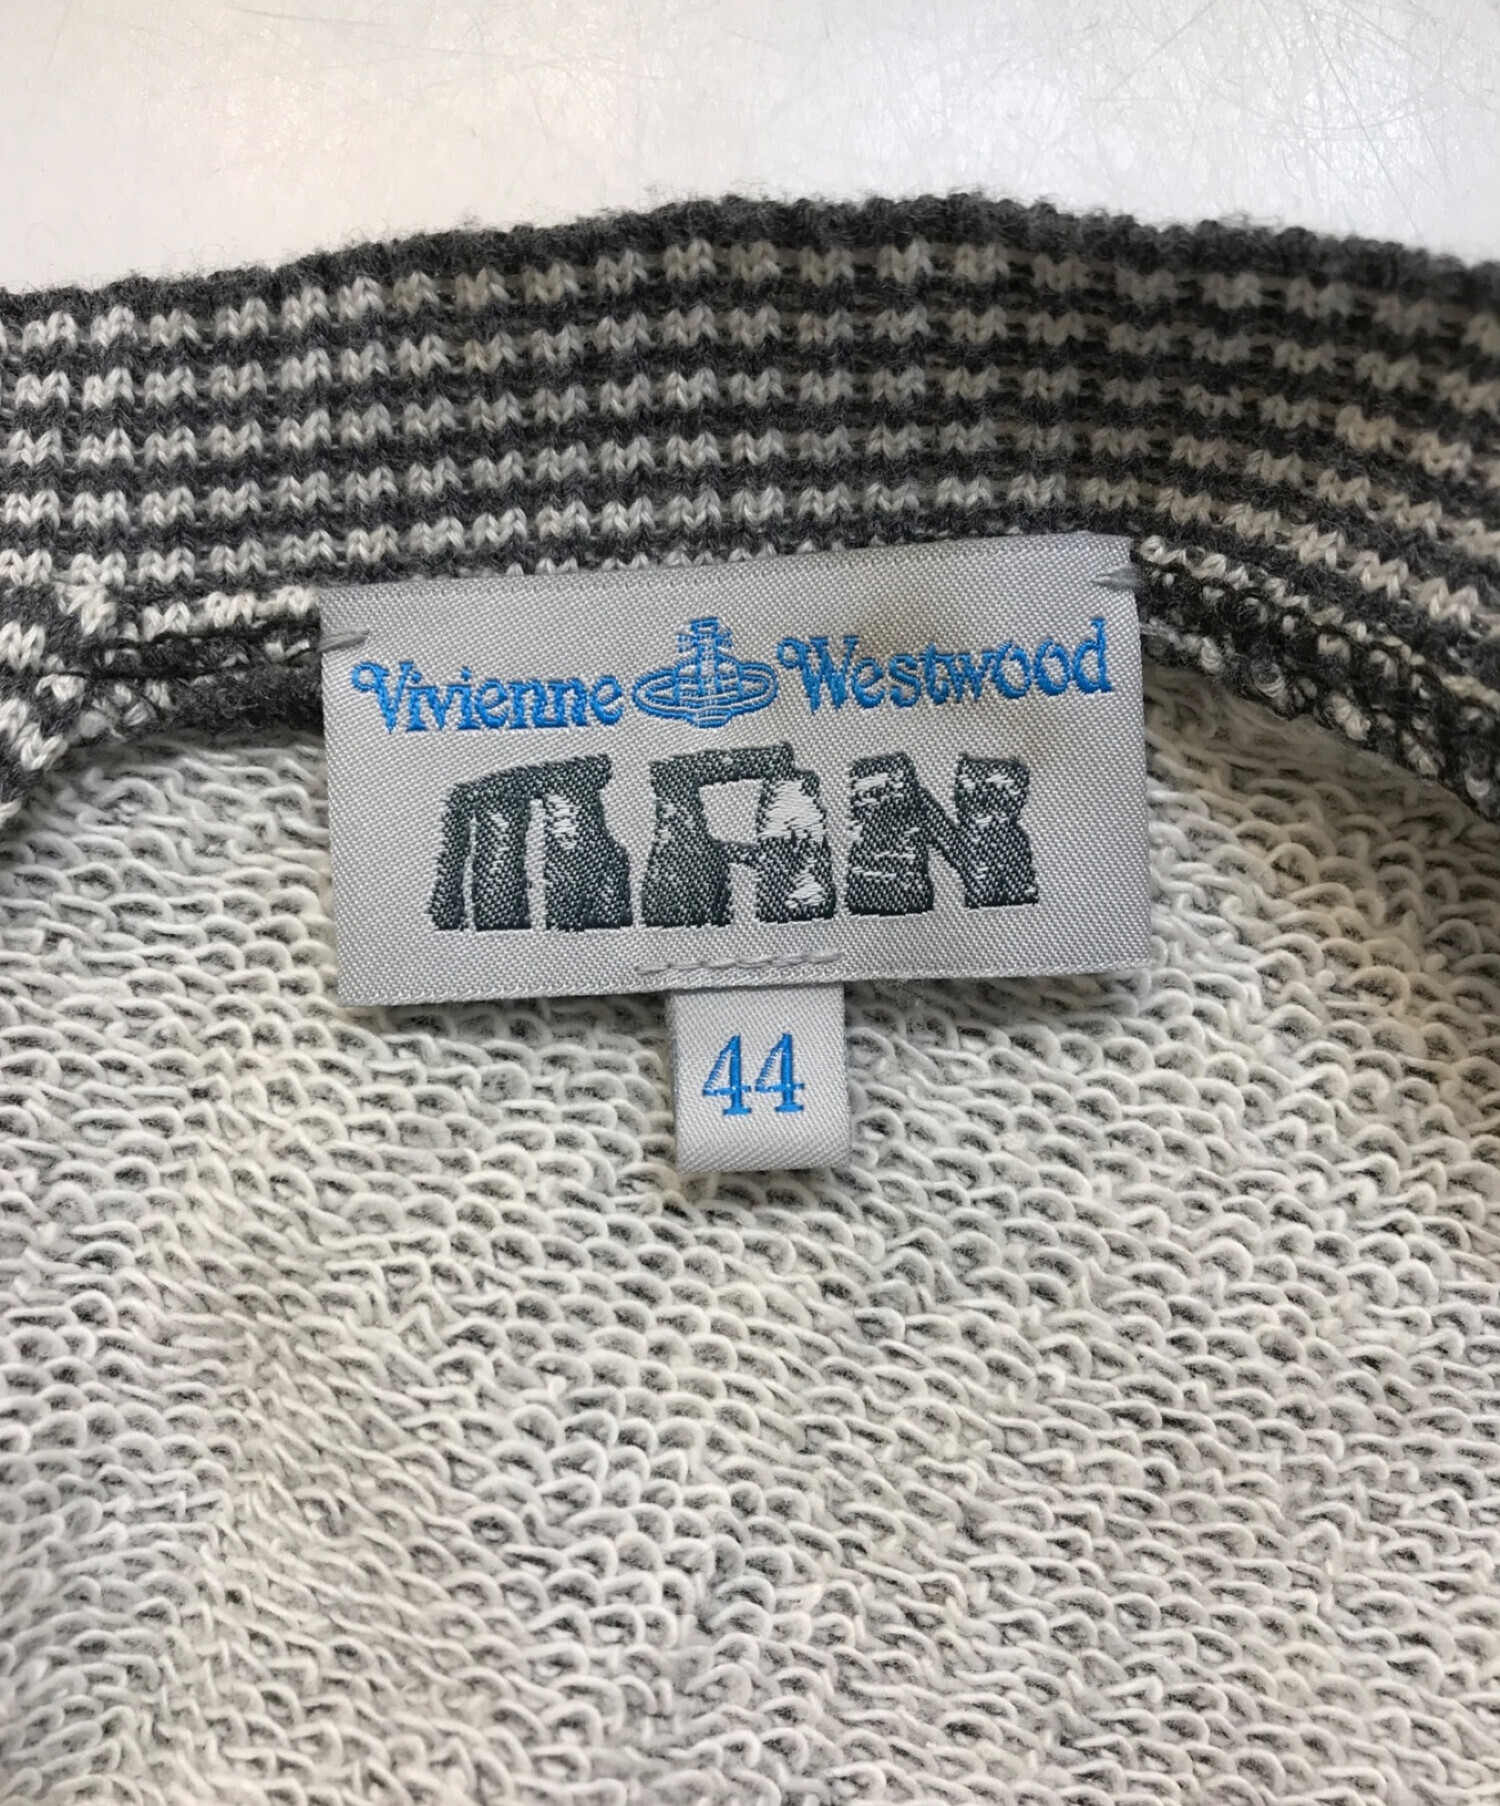 Vivienne Westwood man (ヴィヴィアン ウェストウッド マン) プリントスウェット グレー サイズ:44